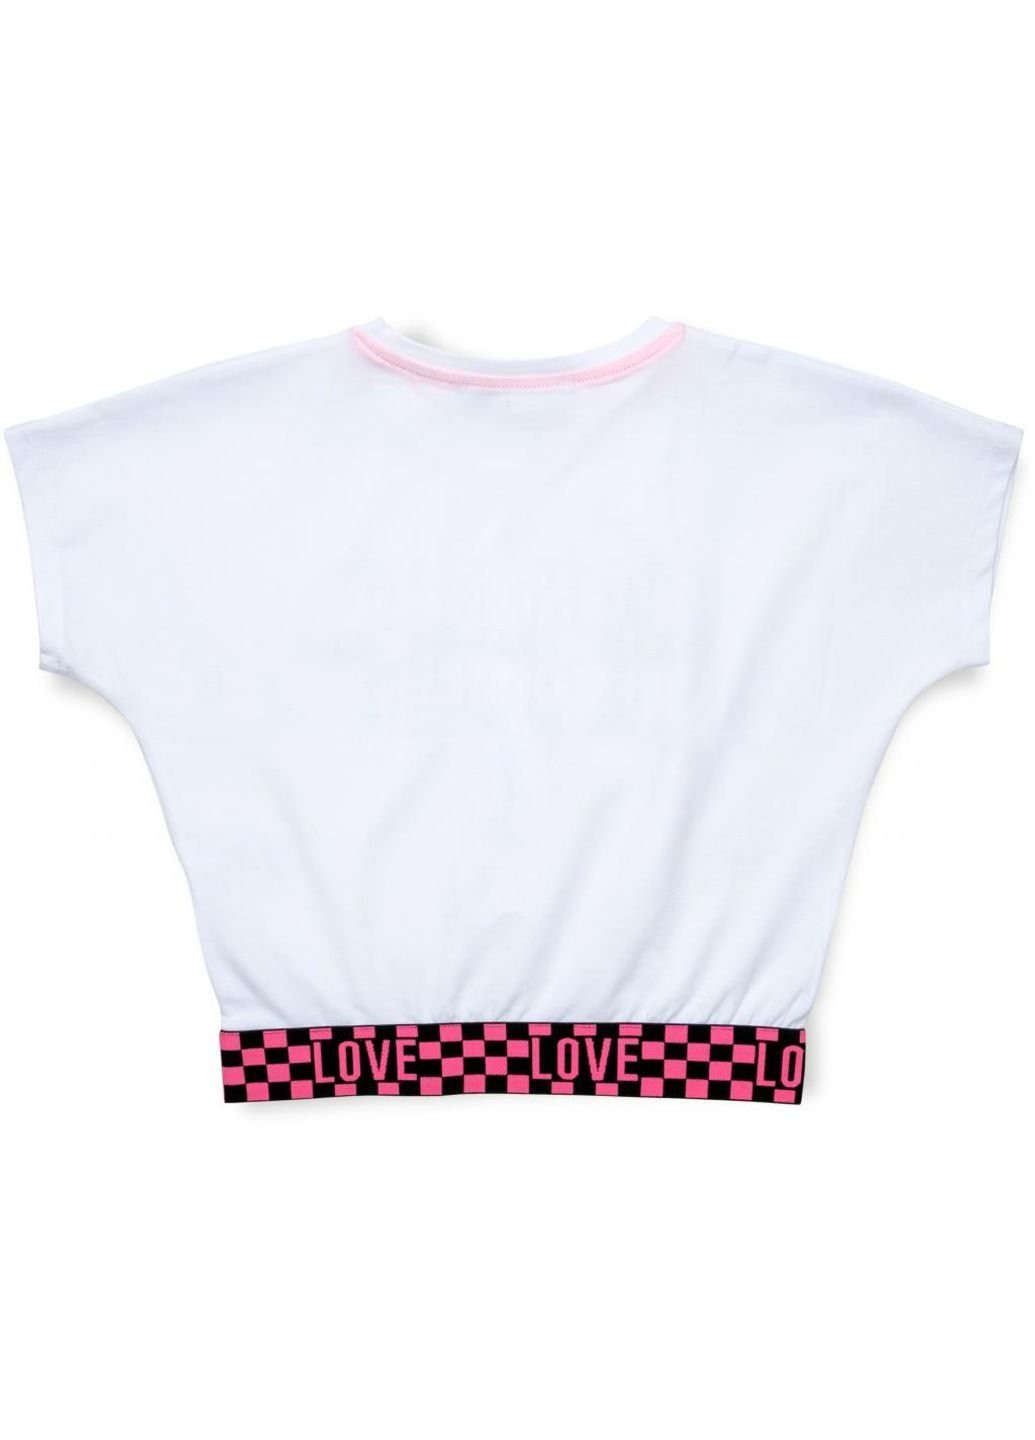 Белая демисезонная футболка детская укороченная (4114-146-white) A-yugi